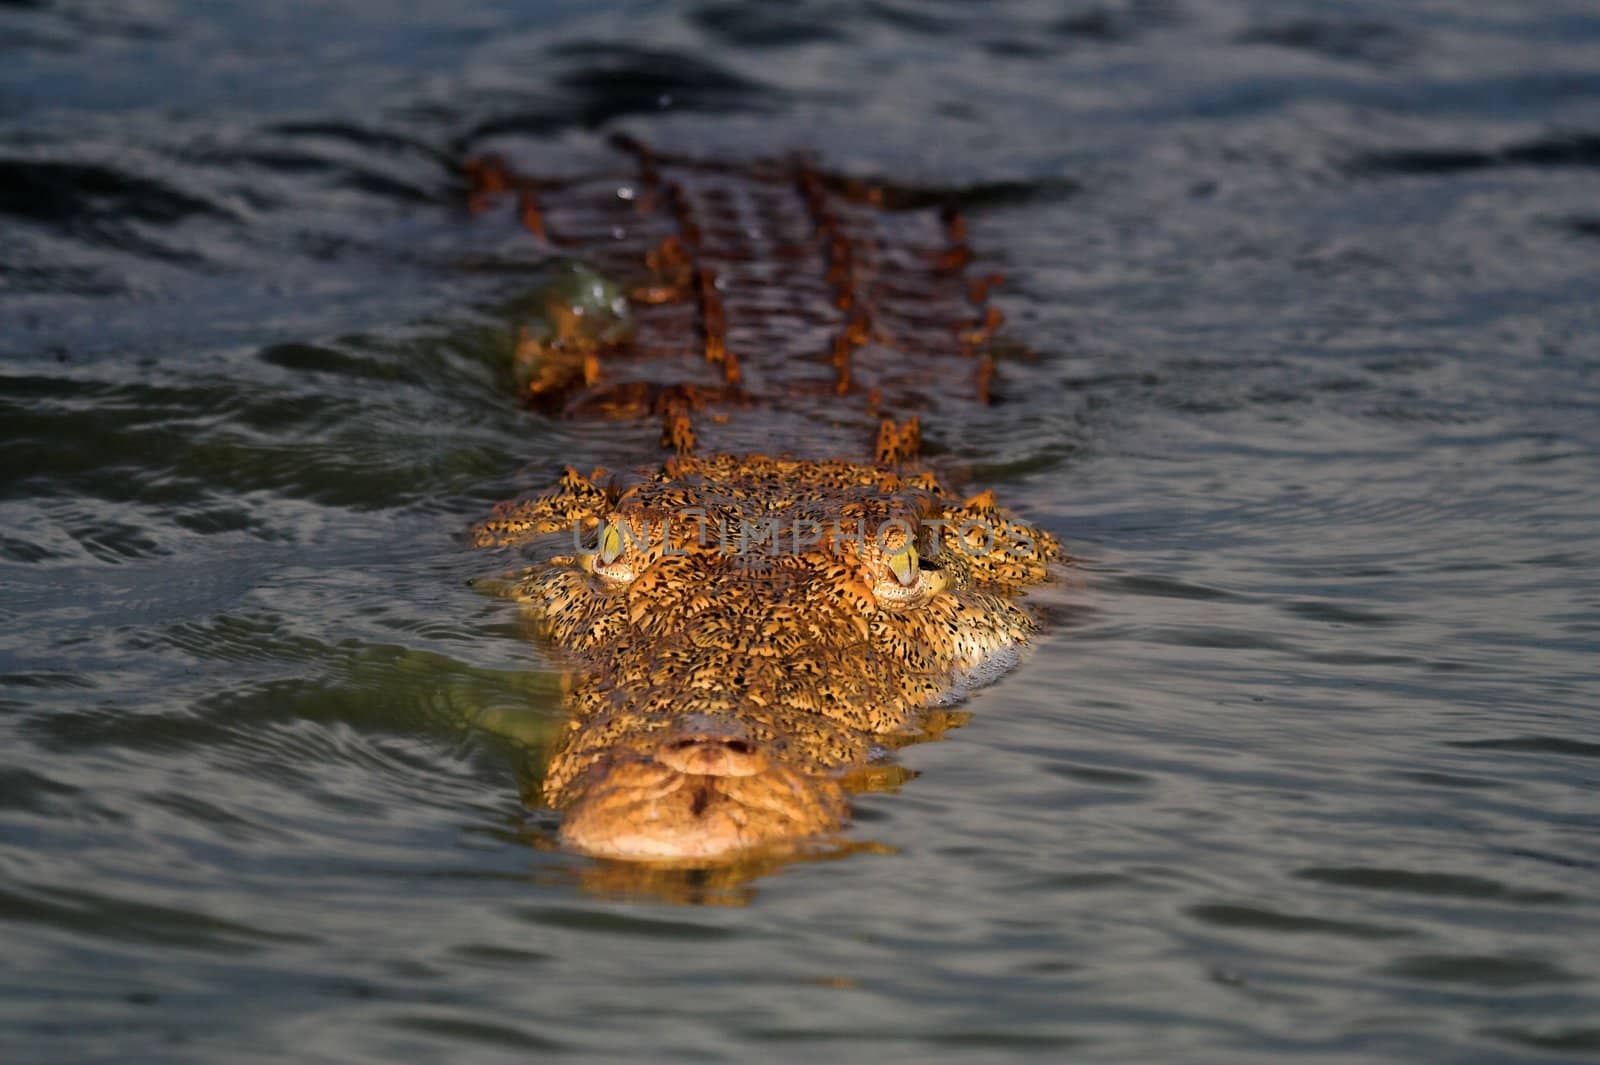 Crocodile floating in the water by nightowlza